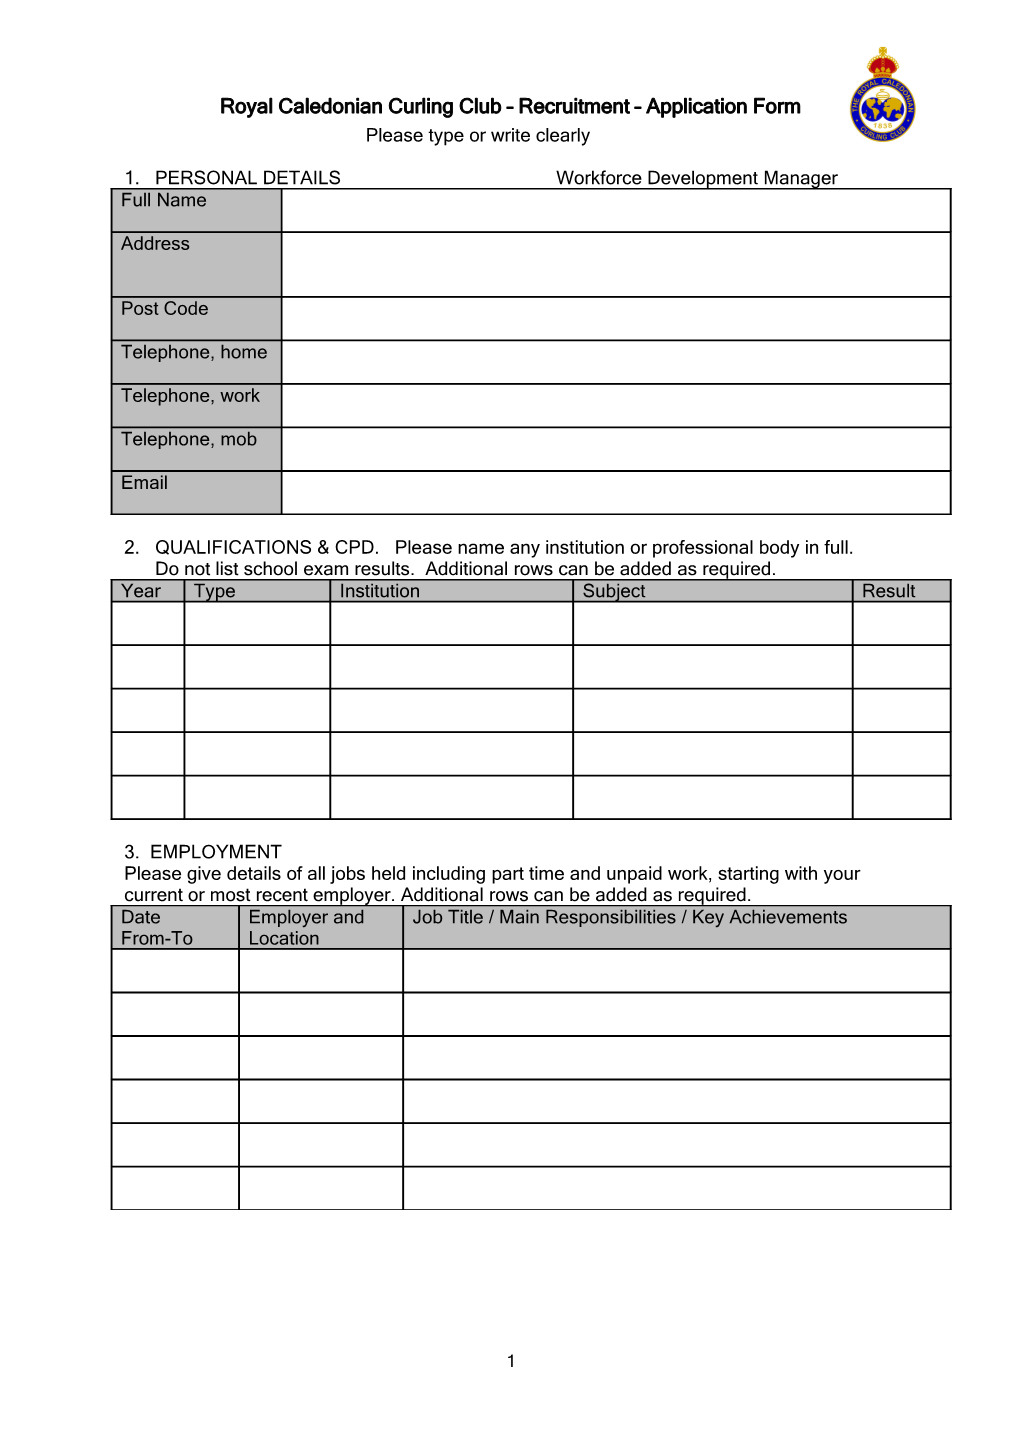 Royal Caledonian Curling Club Recruitment Application Form